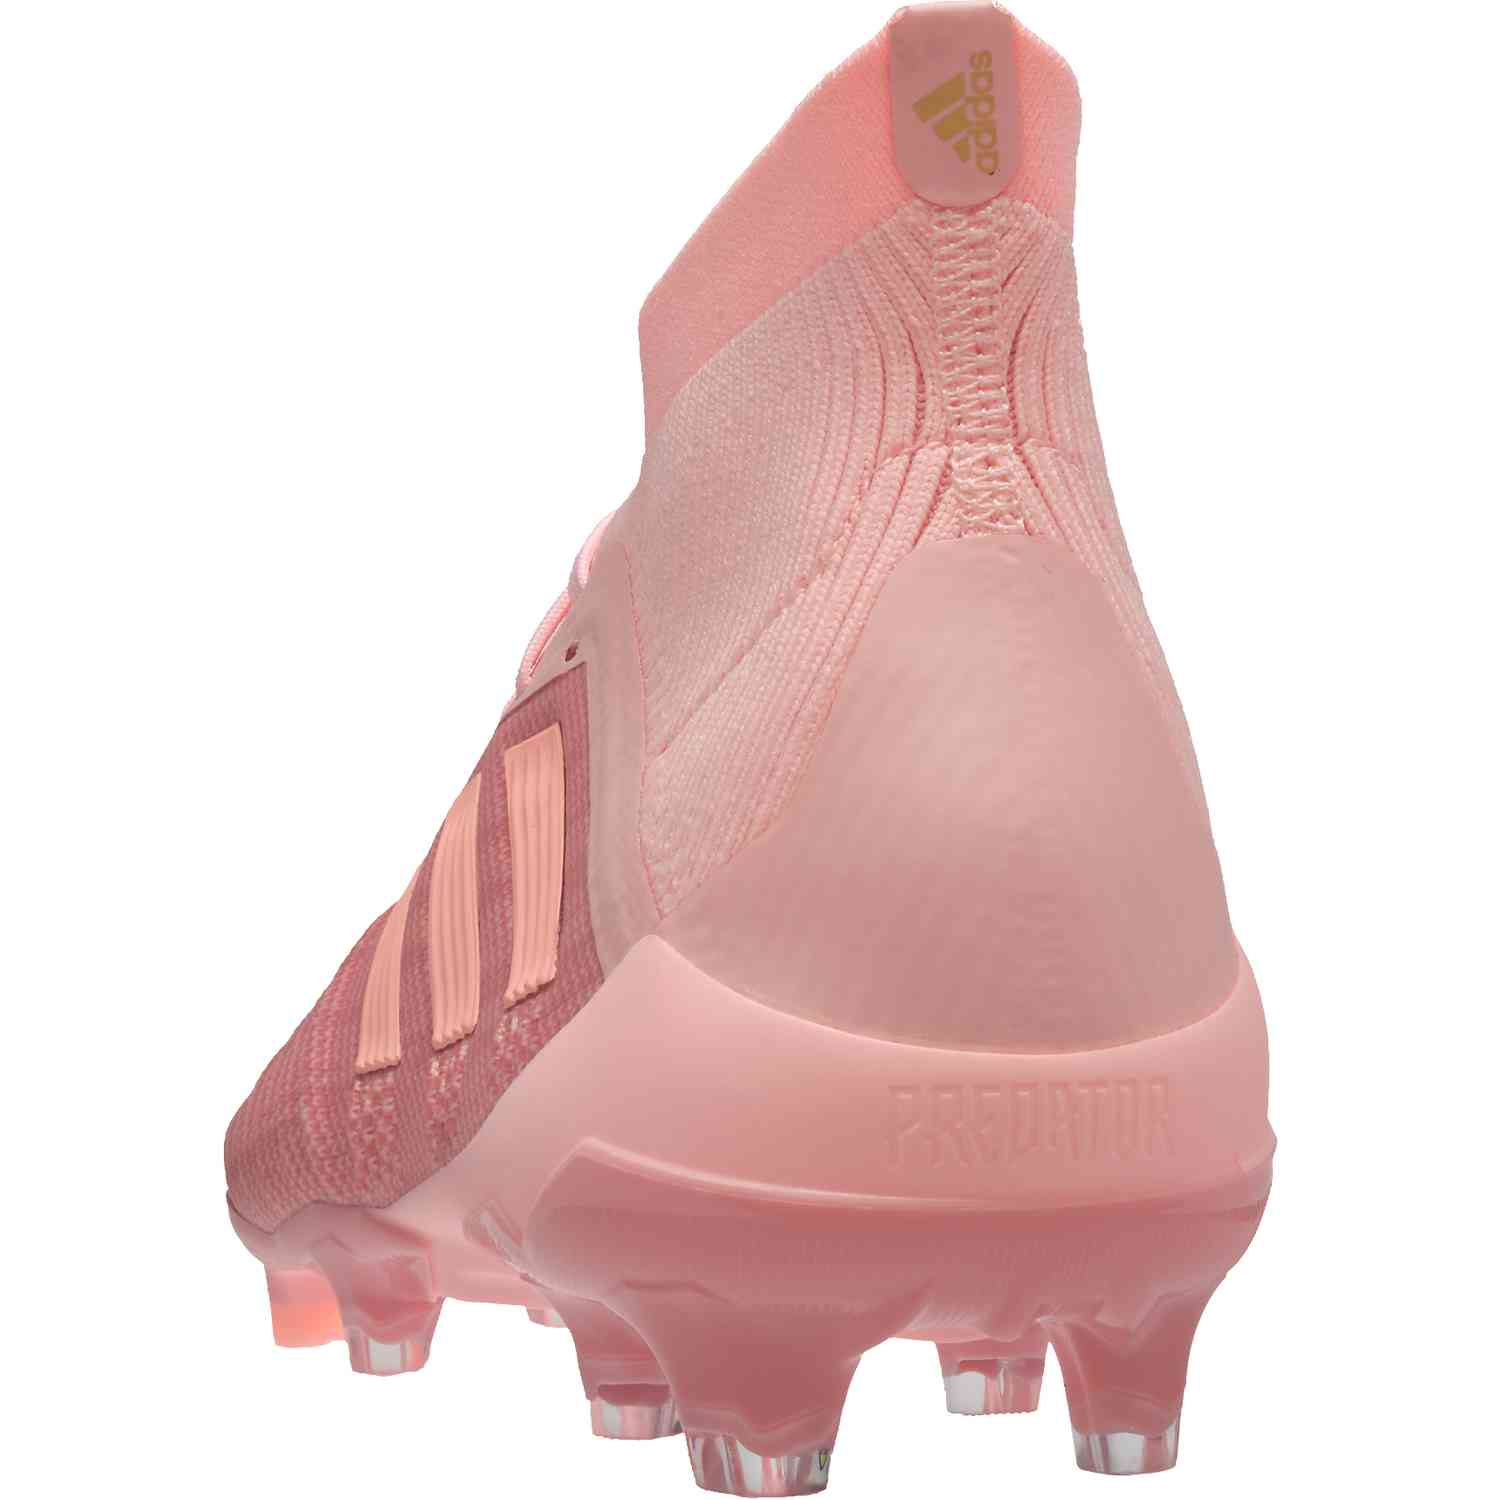 adidas predator 18.1 pink fg